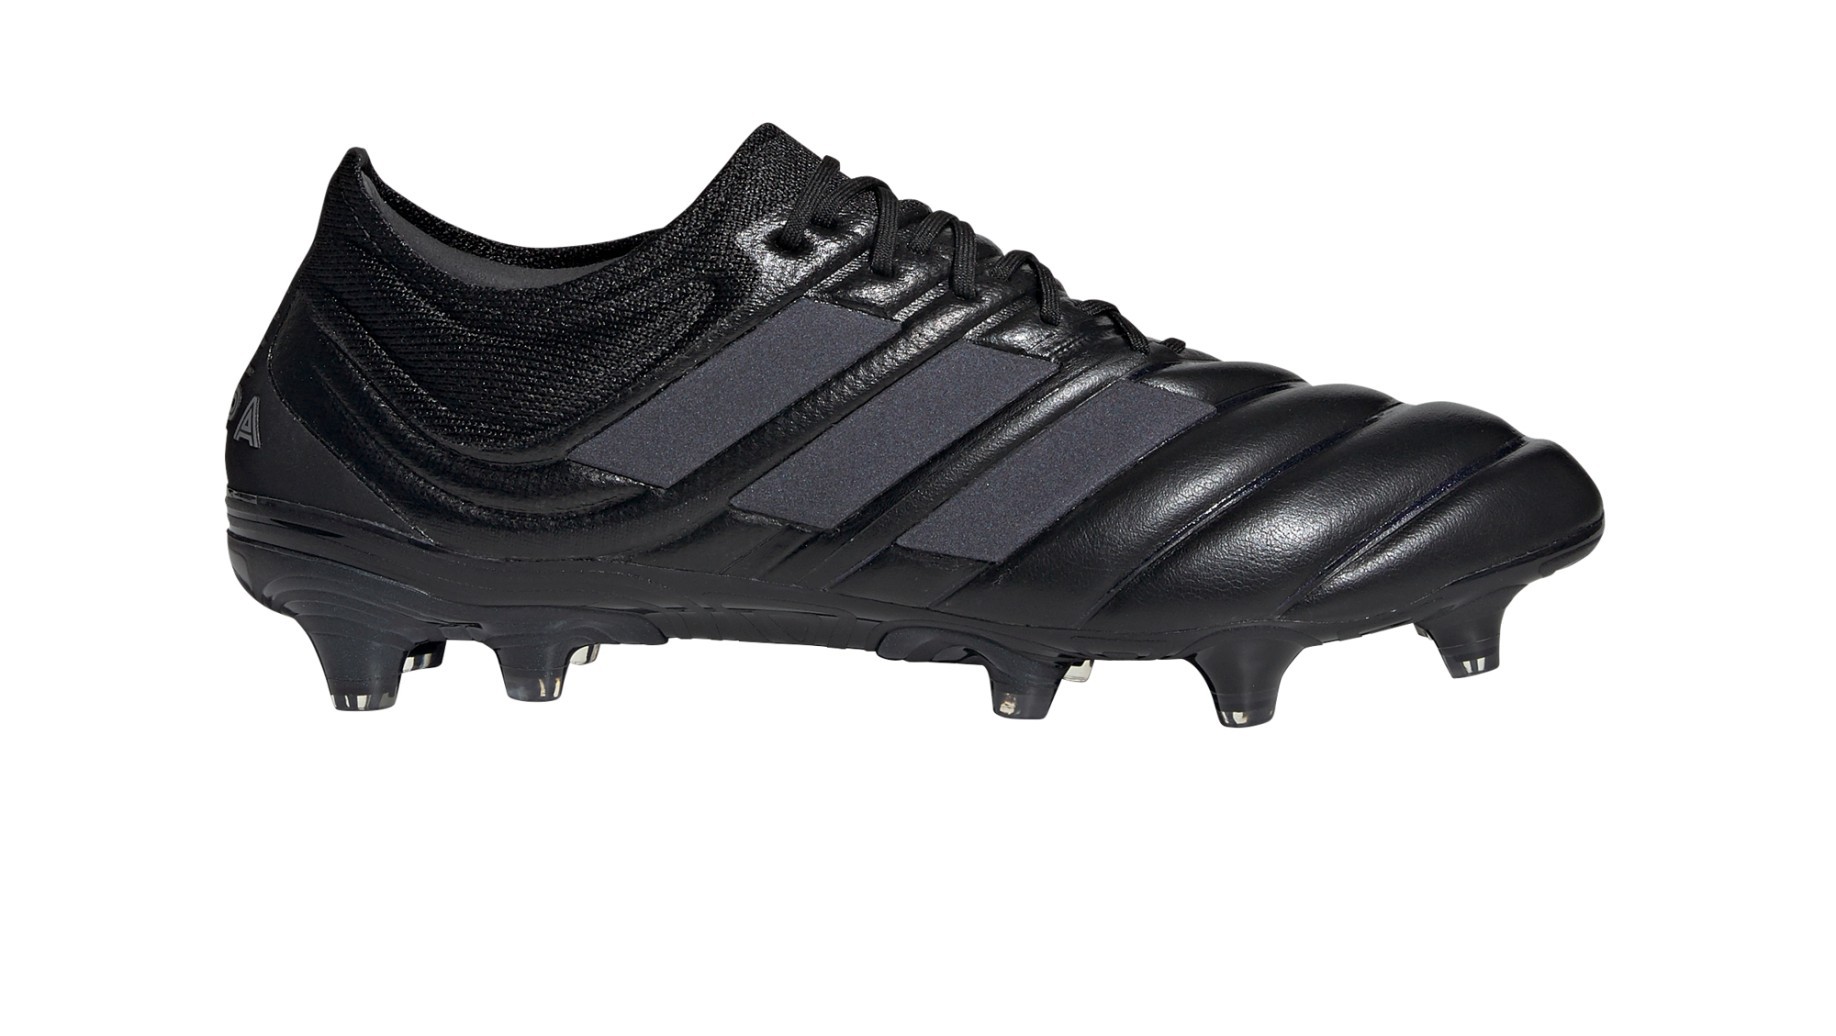 Botas de fútbol Copa 19.1 FG Dark Script colore negro - Adidas - SportIT.com